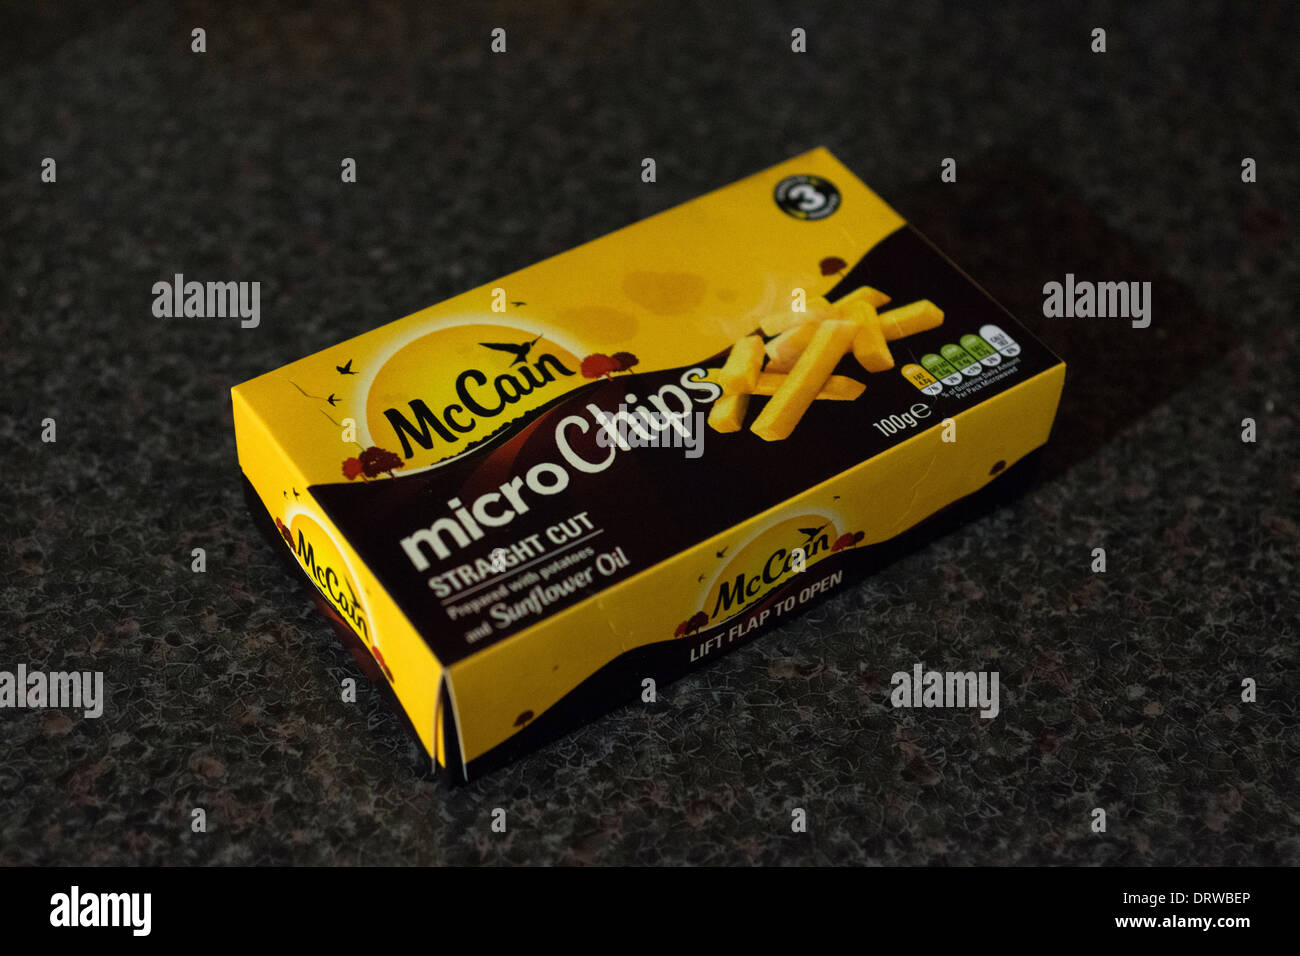 Microwave potato chips frozen fries boxes box Stock Photo - Alamy